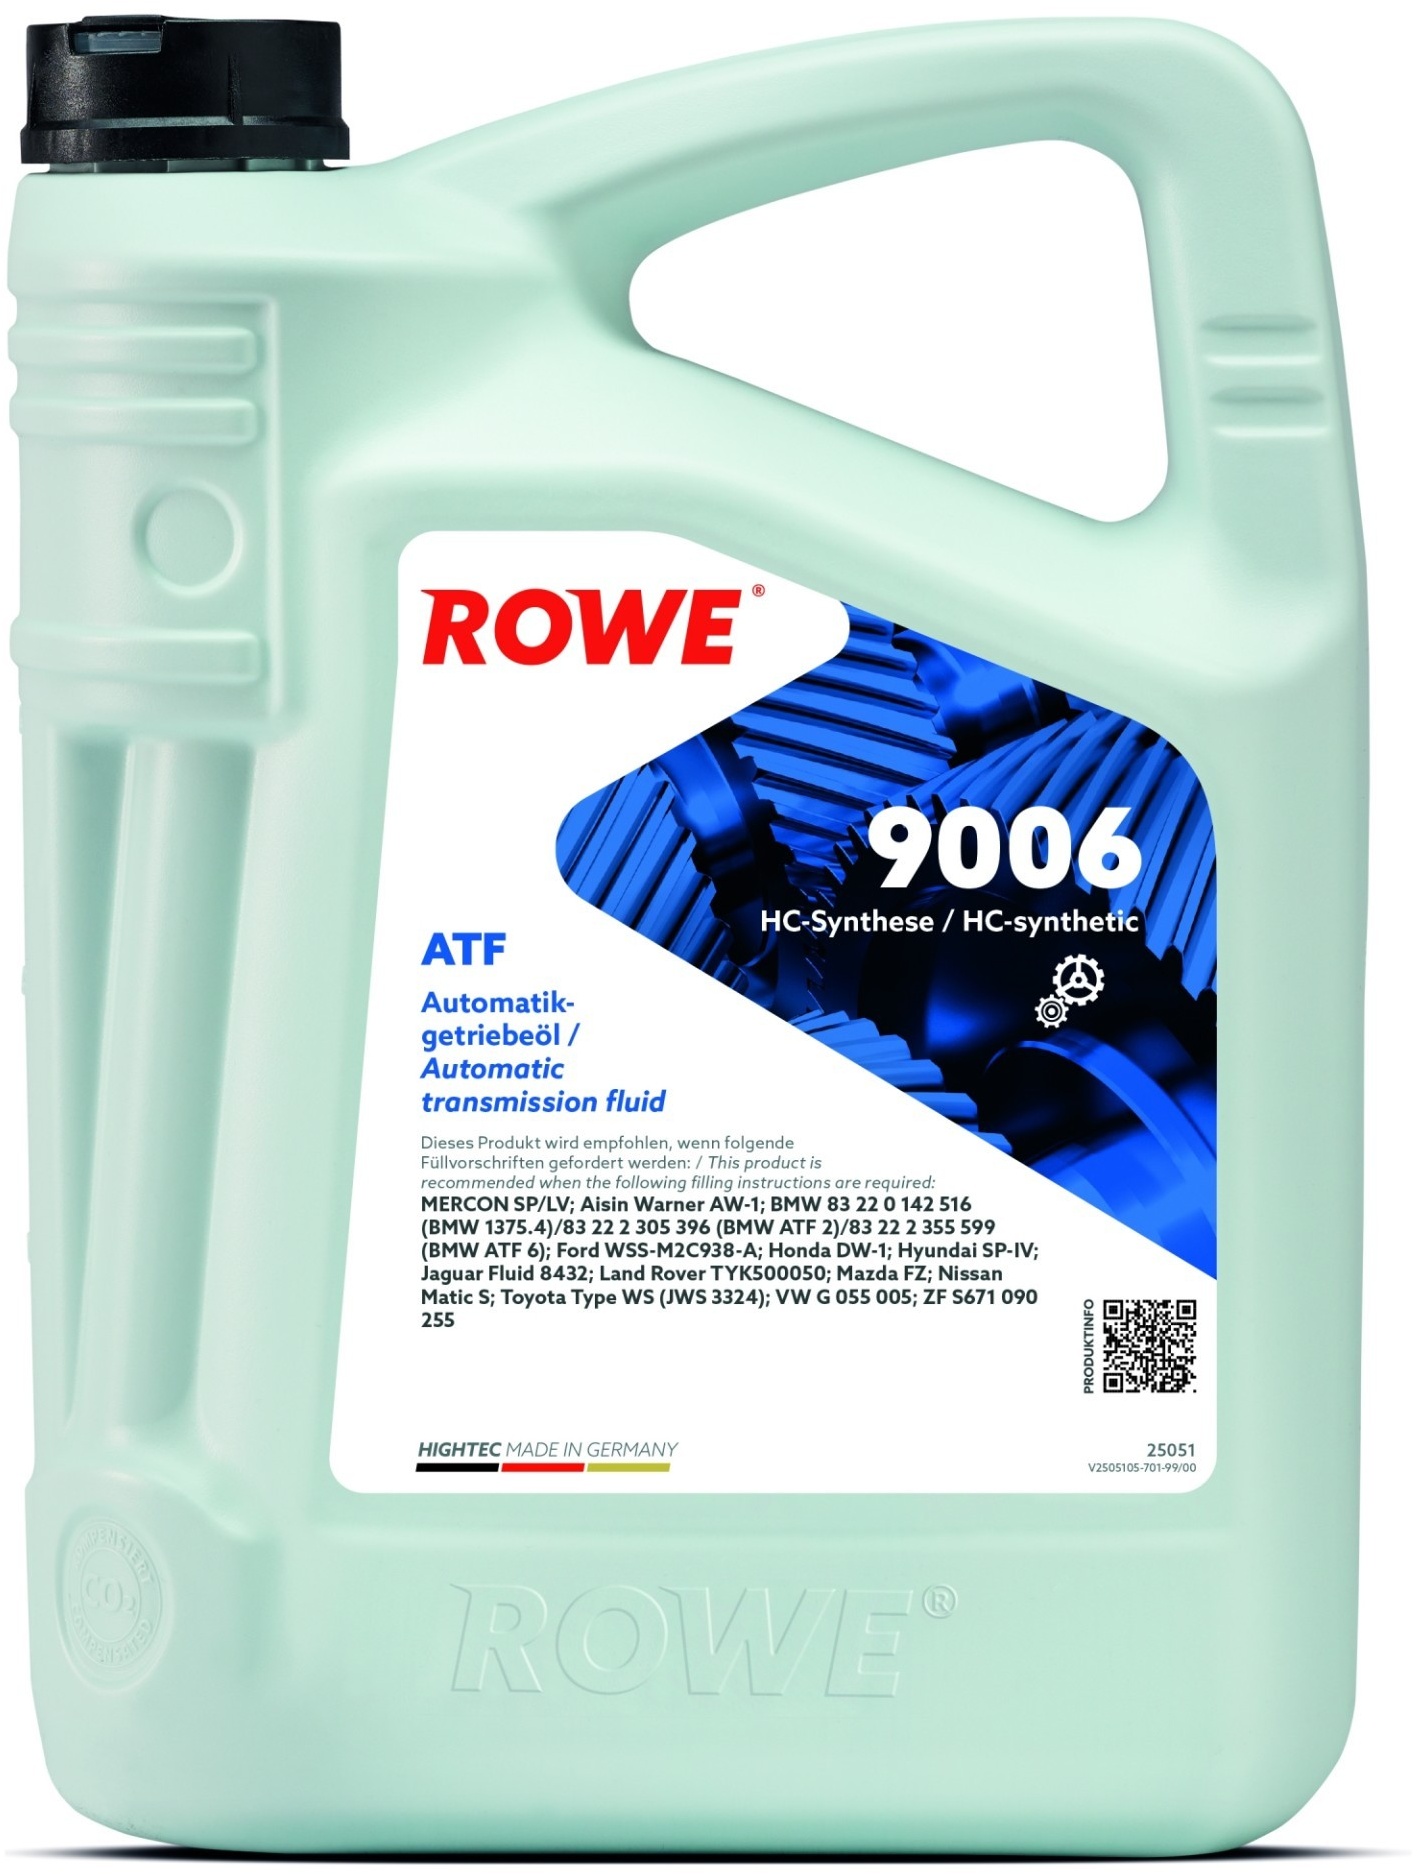 ROWE HIGHTEC ATF 9006 (25051) Teilsynthetiköl 5.0Lfür